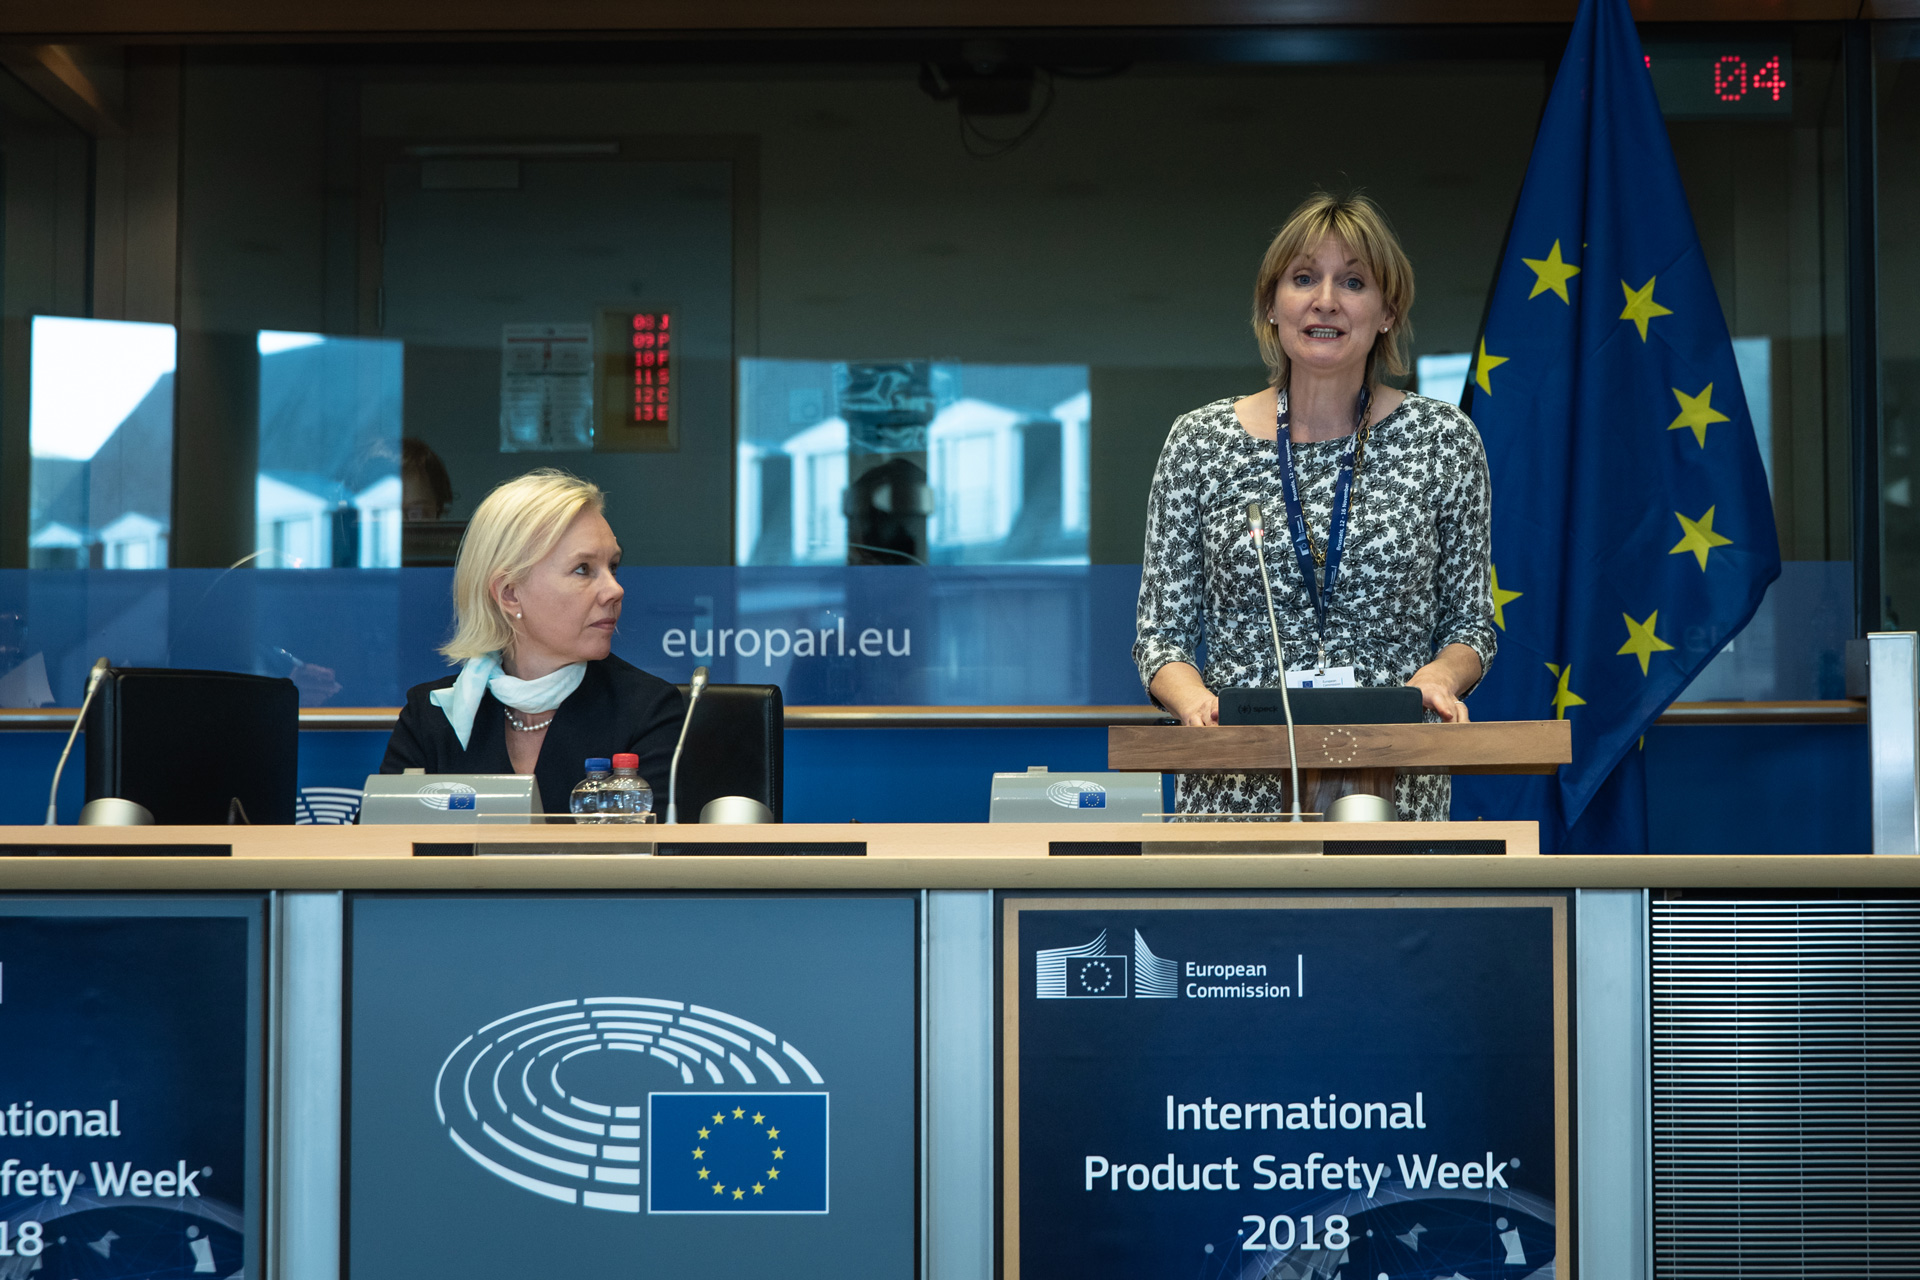 International Product Safety Week 2018 / European Commission / ProPager / Laura PERERA SAN MARTIN, 2018.